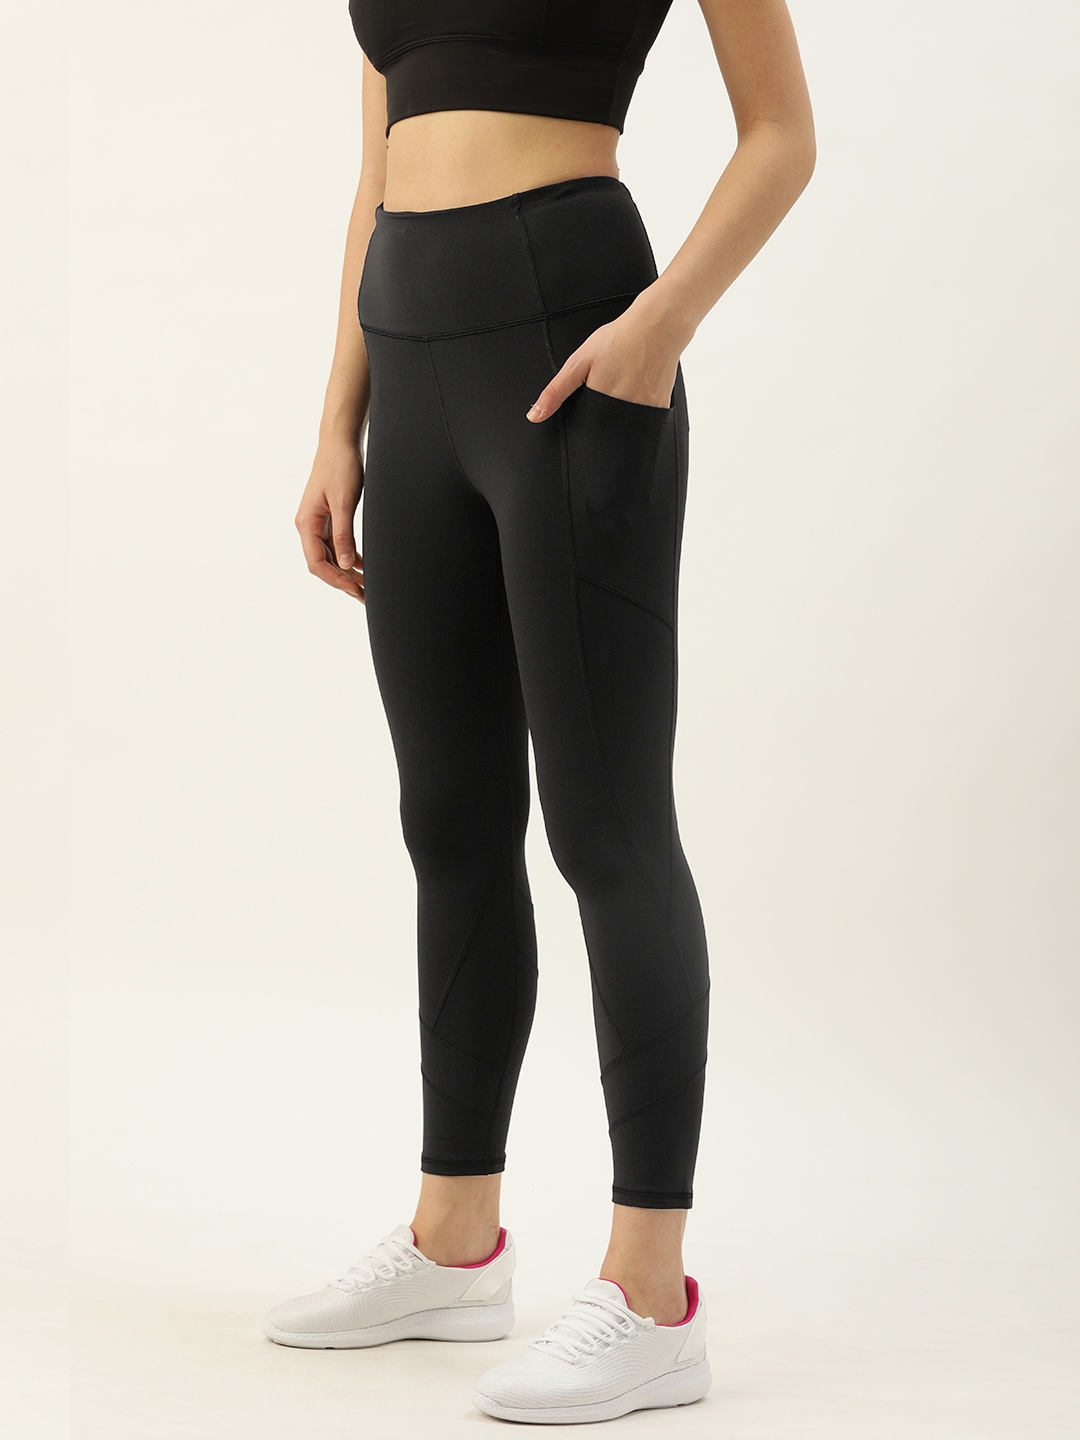 Buy Enamor Women Athleisure Black Dry Fit Legging E258 - Tights